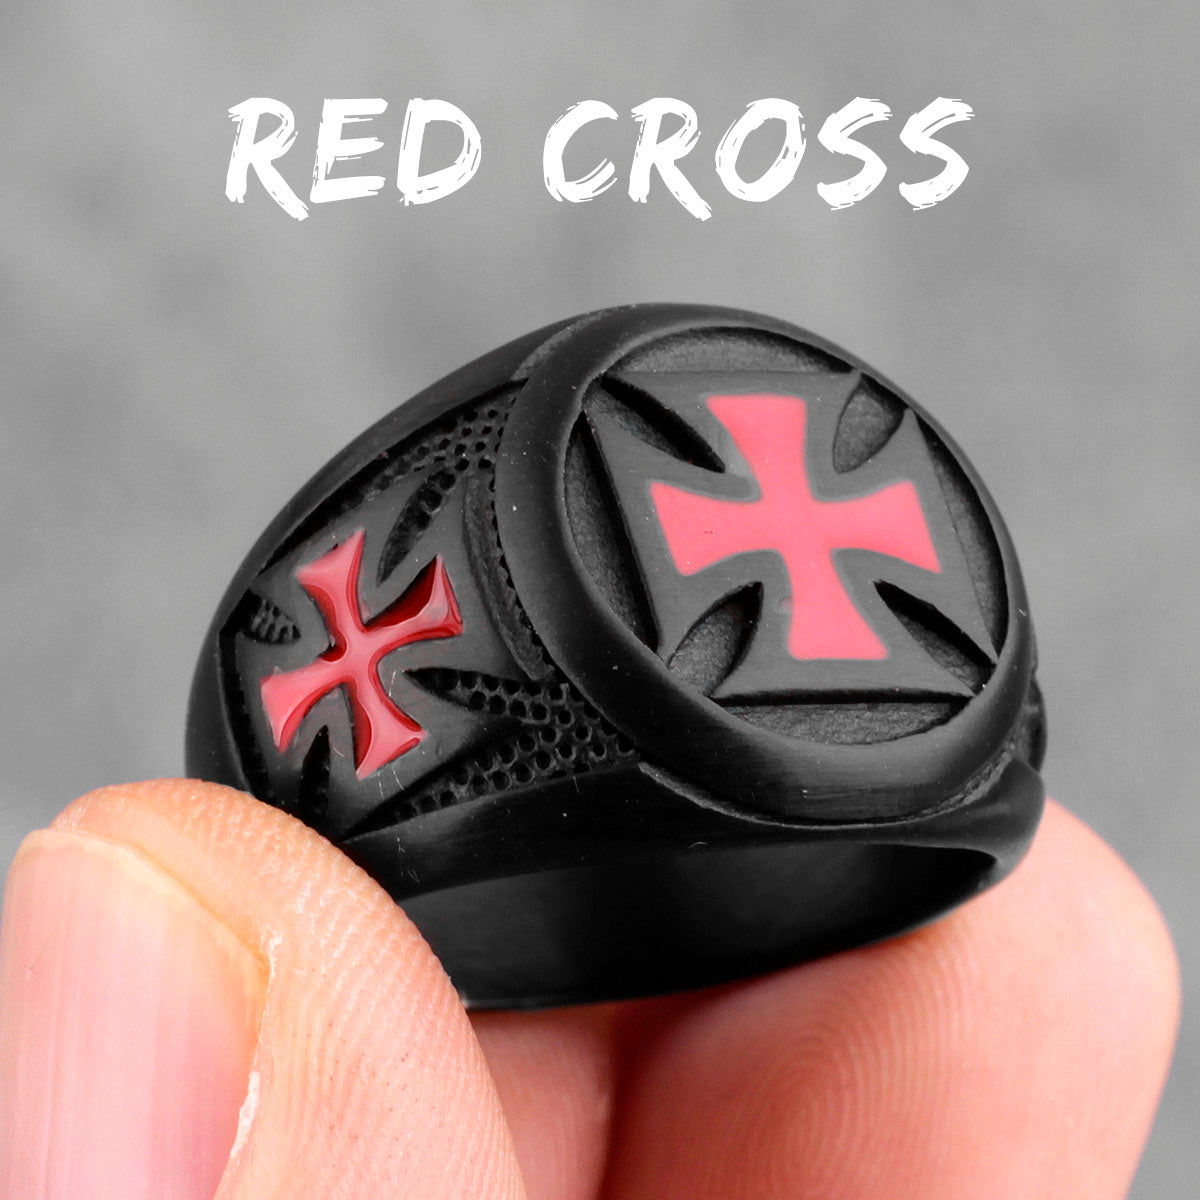 Red Cross Black Stainless Steel Mens Rings Religion Punk Hip Hop for Male Boyfriend Biker Jewelry Creativity Gift R480-Red Cross